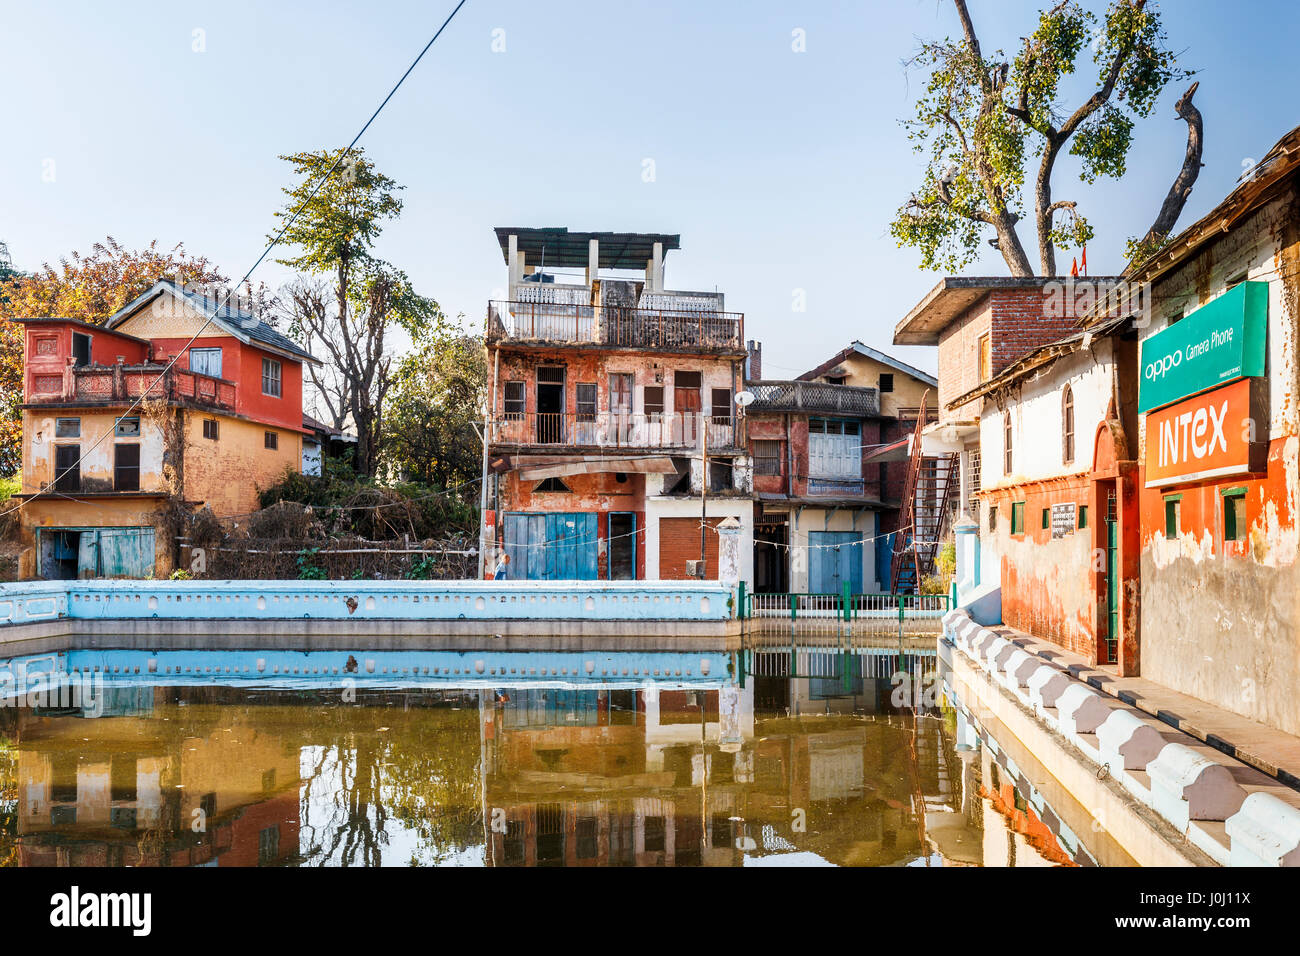 Dilapidated old buildings awaiting restoration reflected in the village tank (pond), Pragpur heritage village, Kagra district, Himachal Pradesh, India Stock Photo